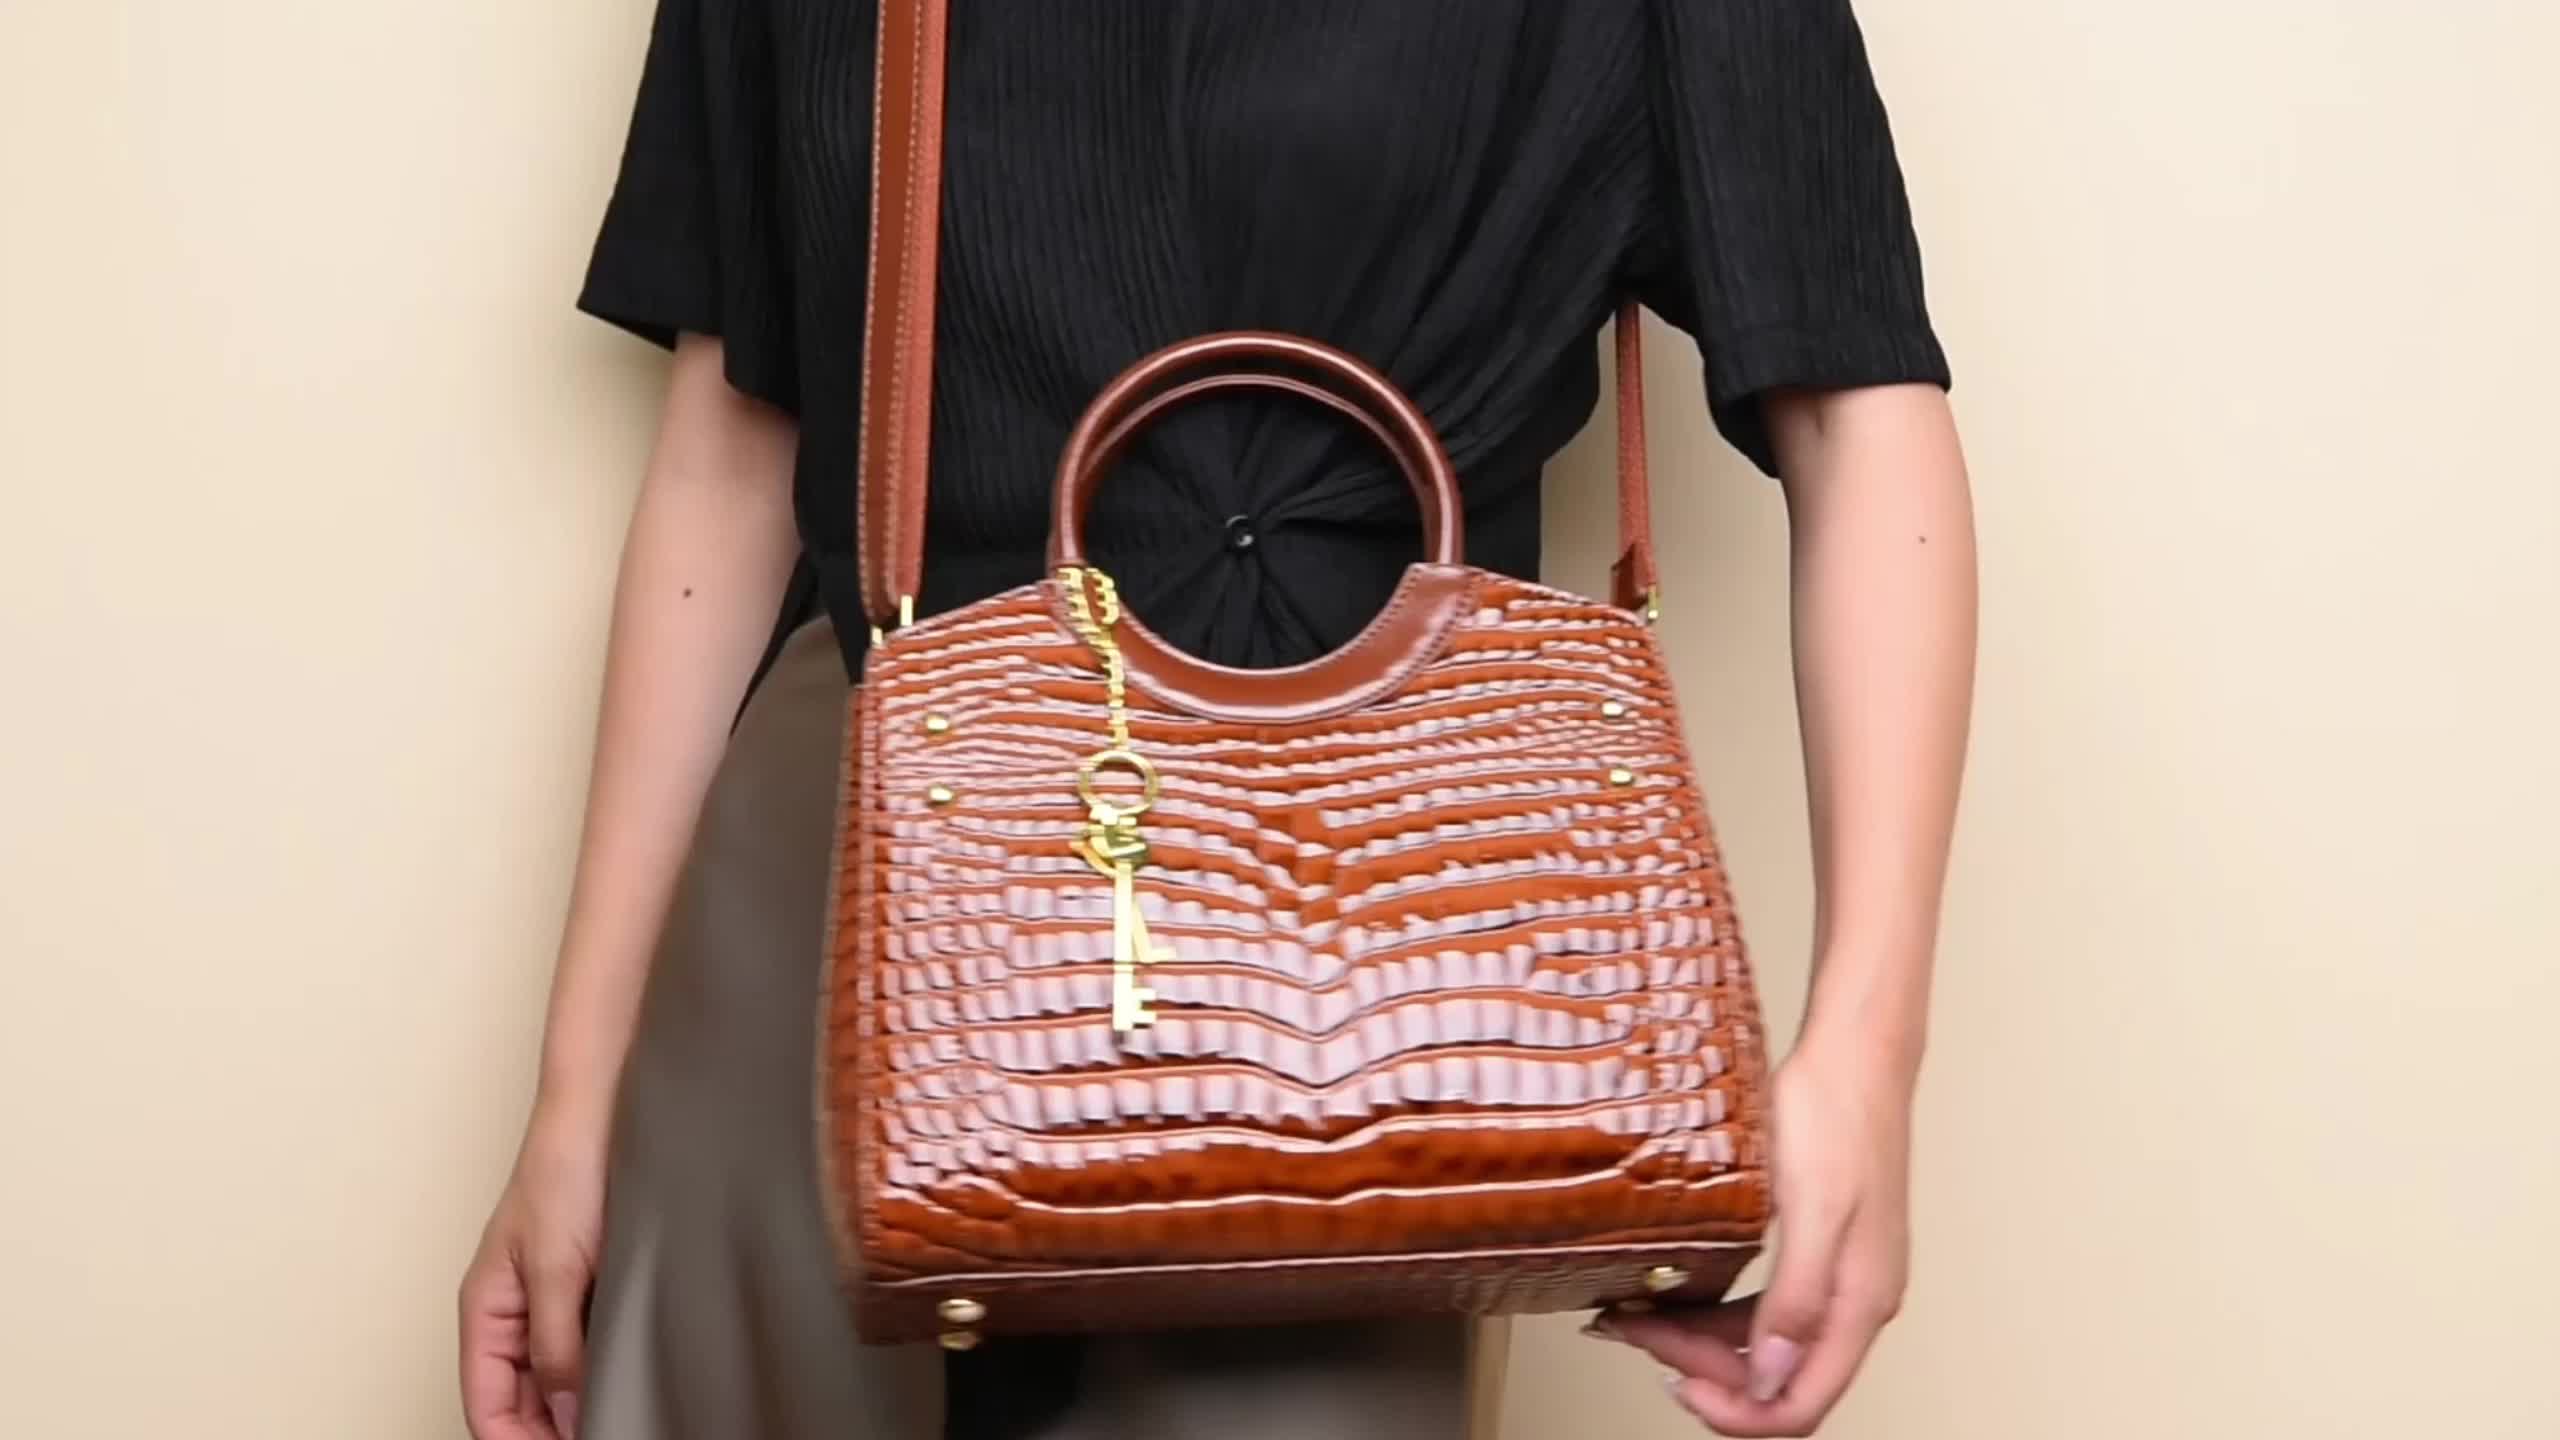 Women Crocodile Handbags Top Handle Alligator Leather Shoulder Messenger Bag Lady Fashion Daily Totes - Blue